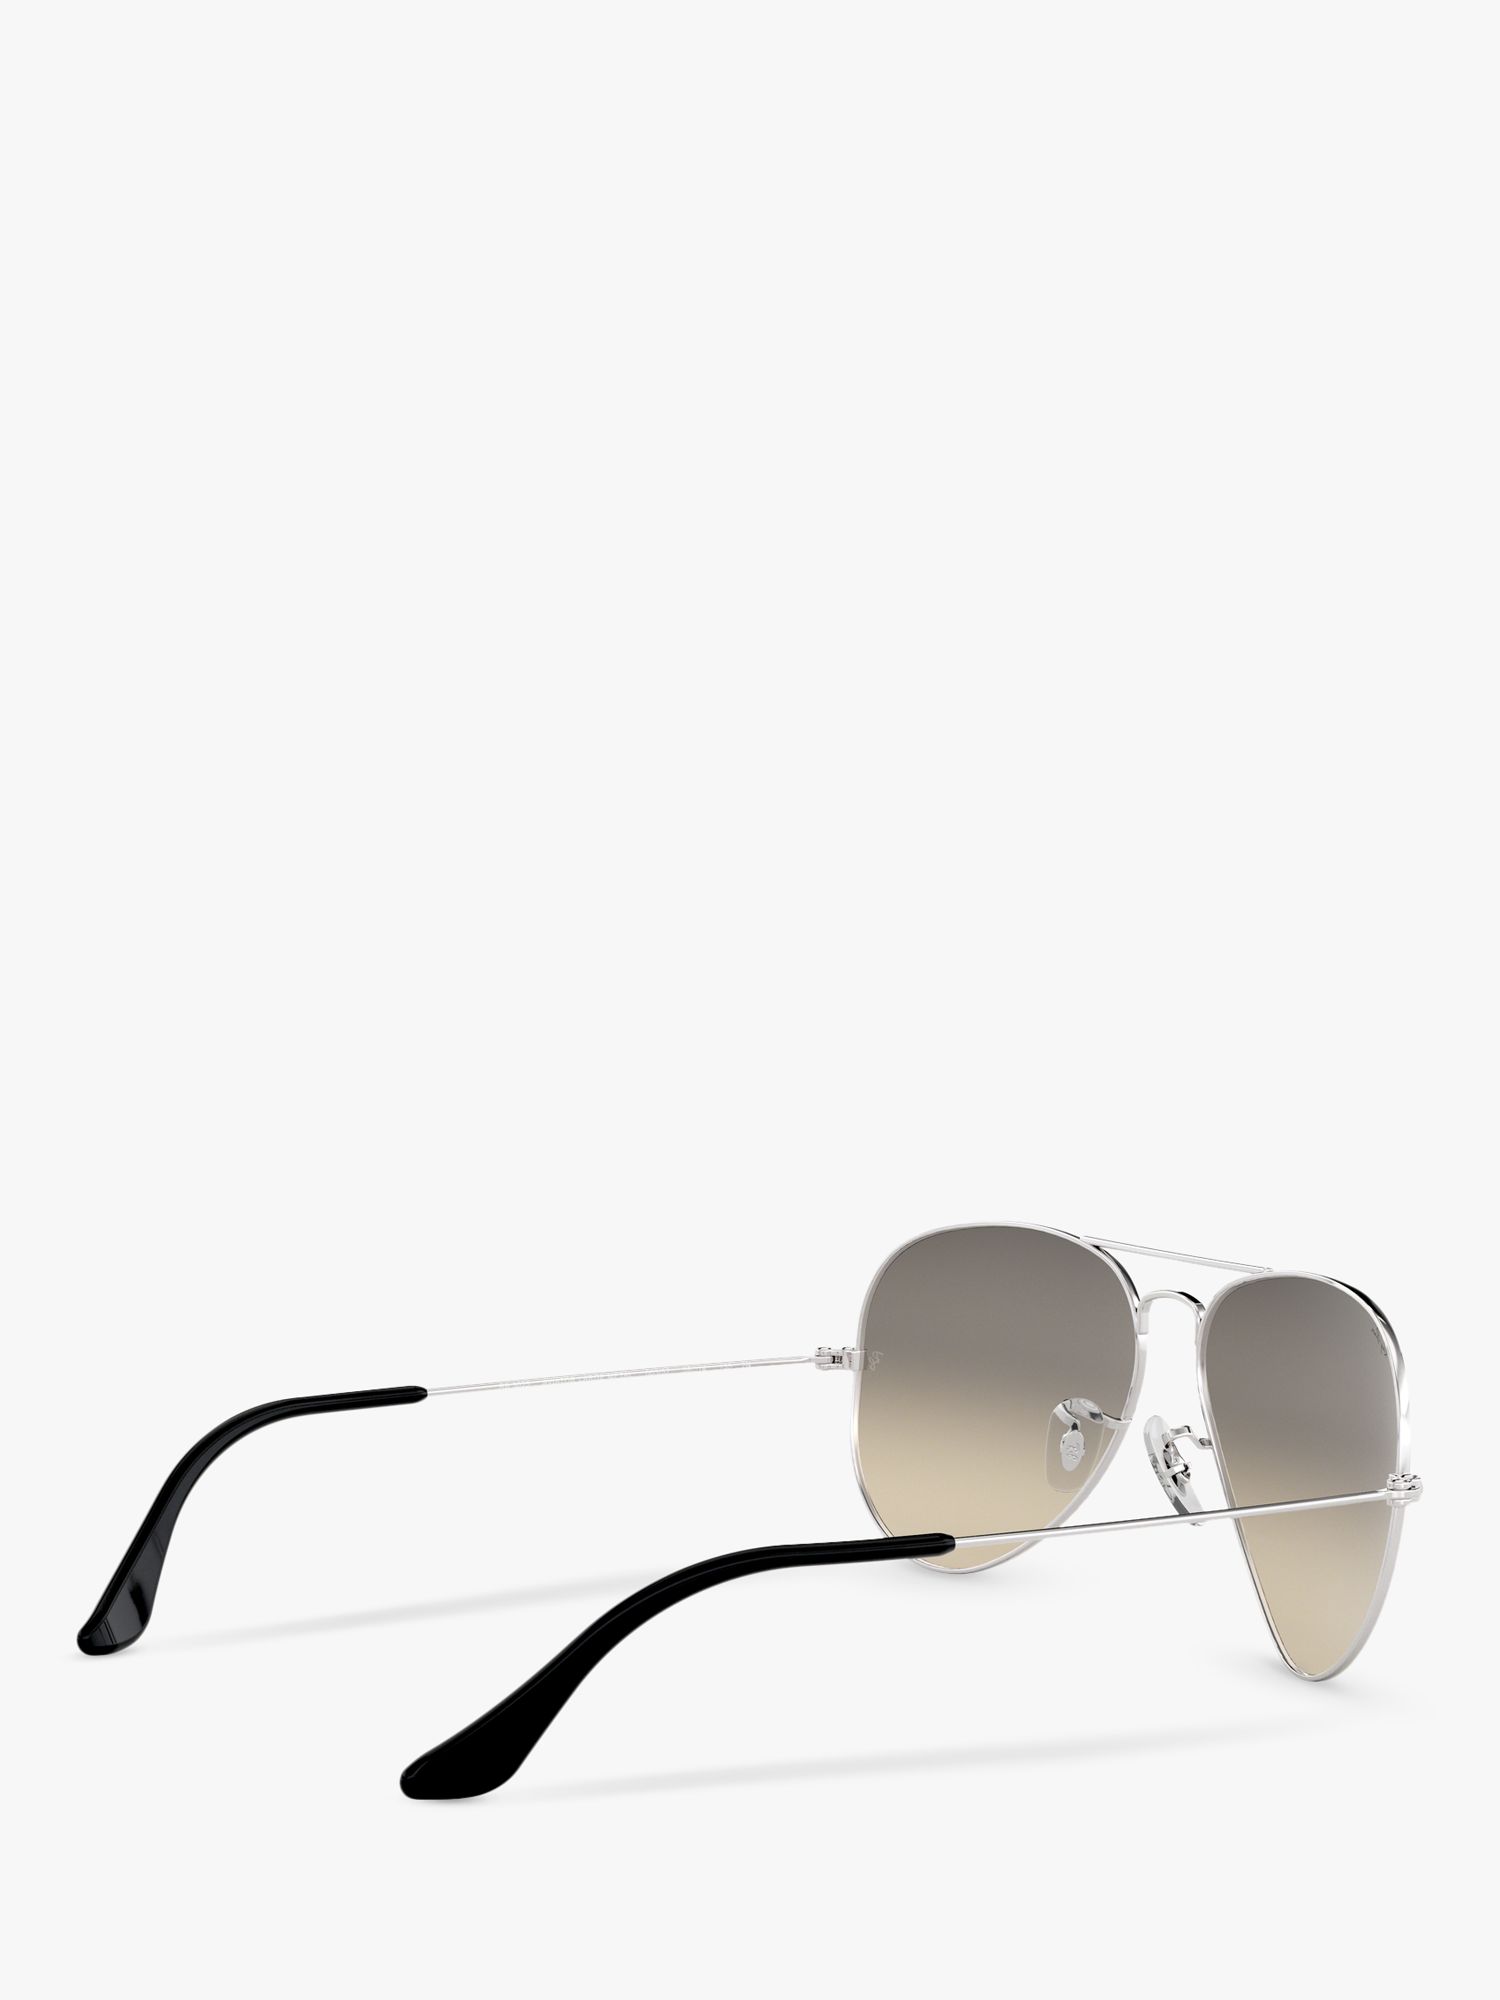 Buy Ray-Ban RB3025 Men's Original Aviator Sunglasses Online at johnlewis.com